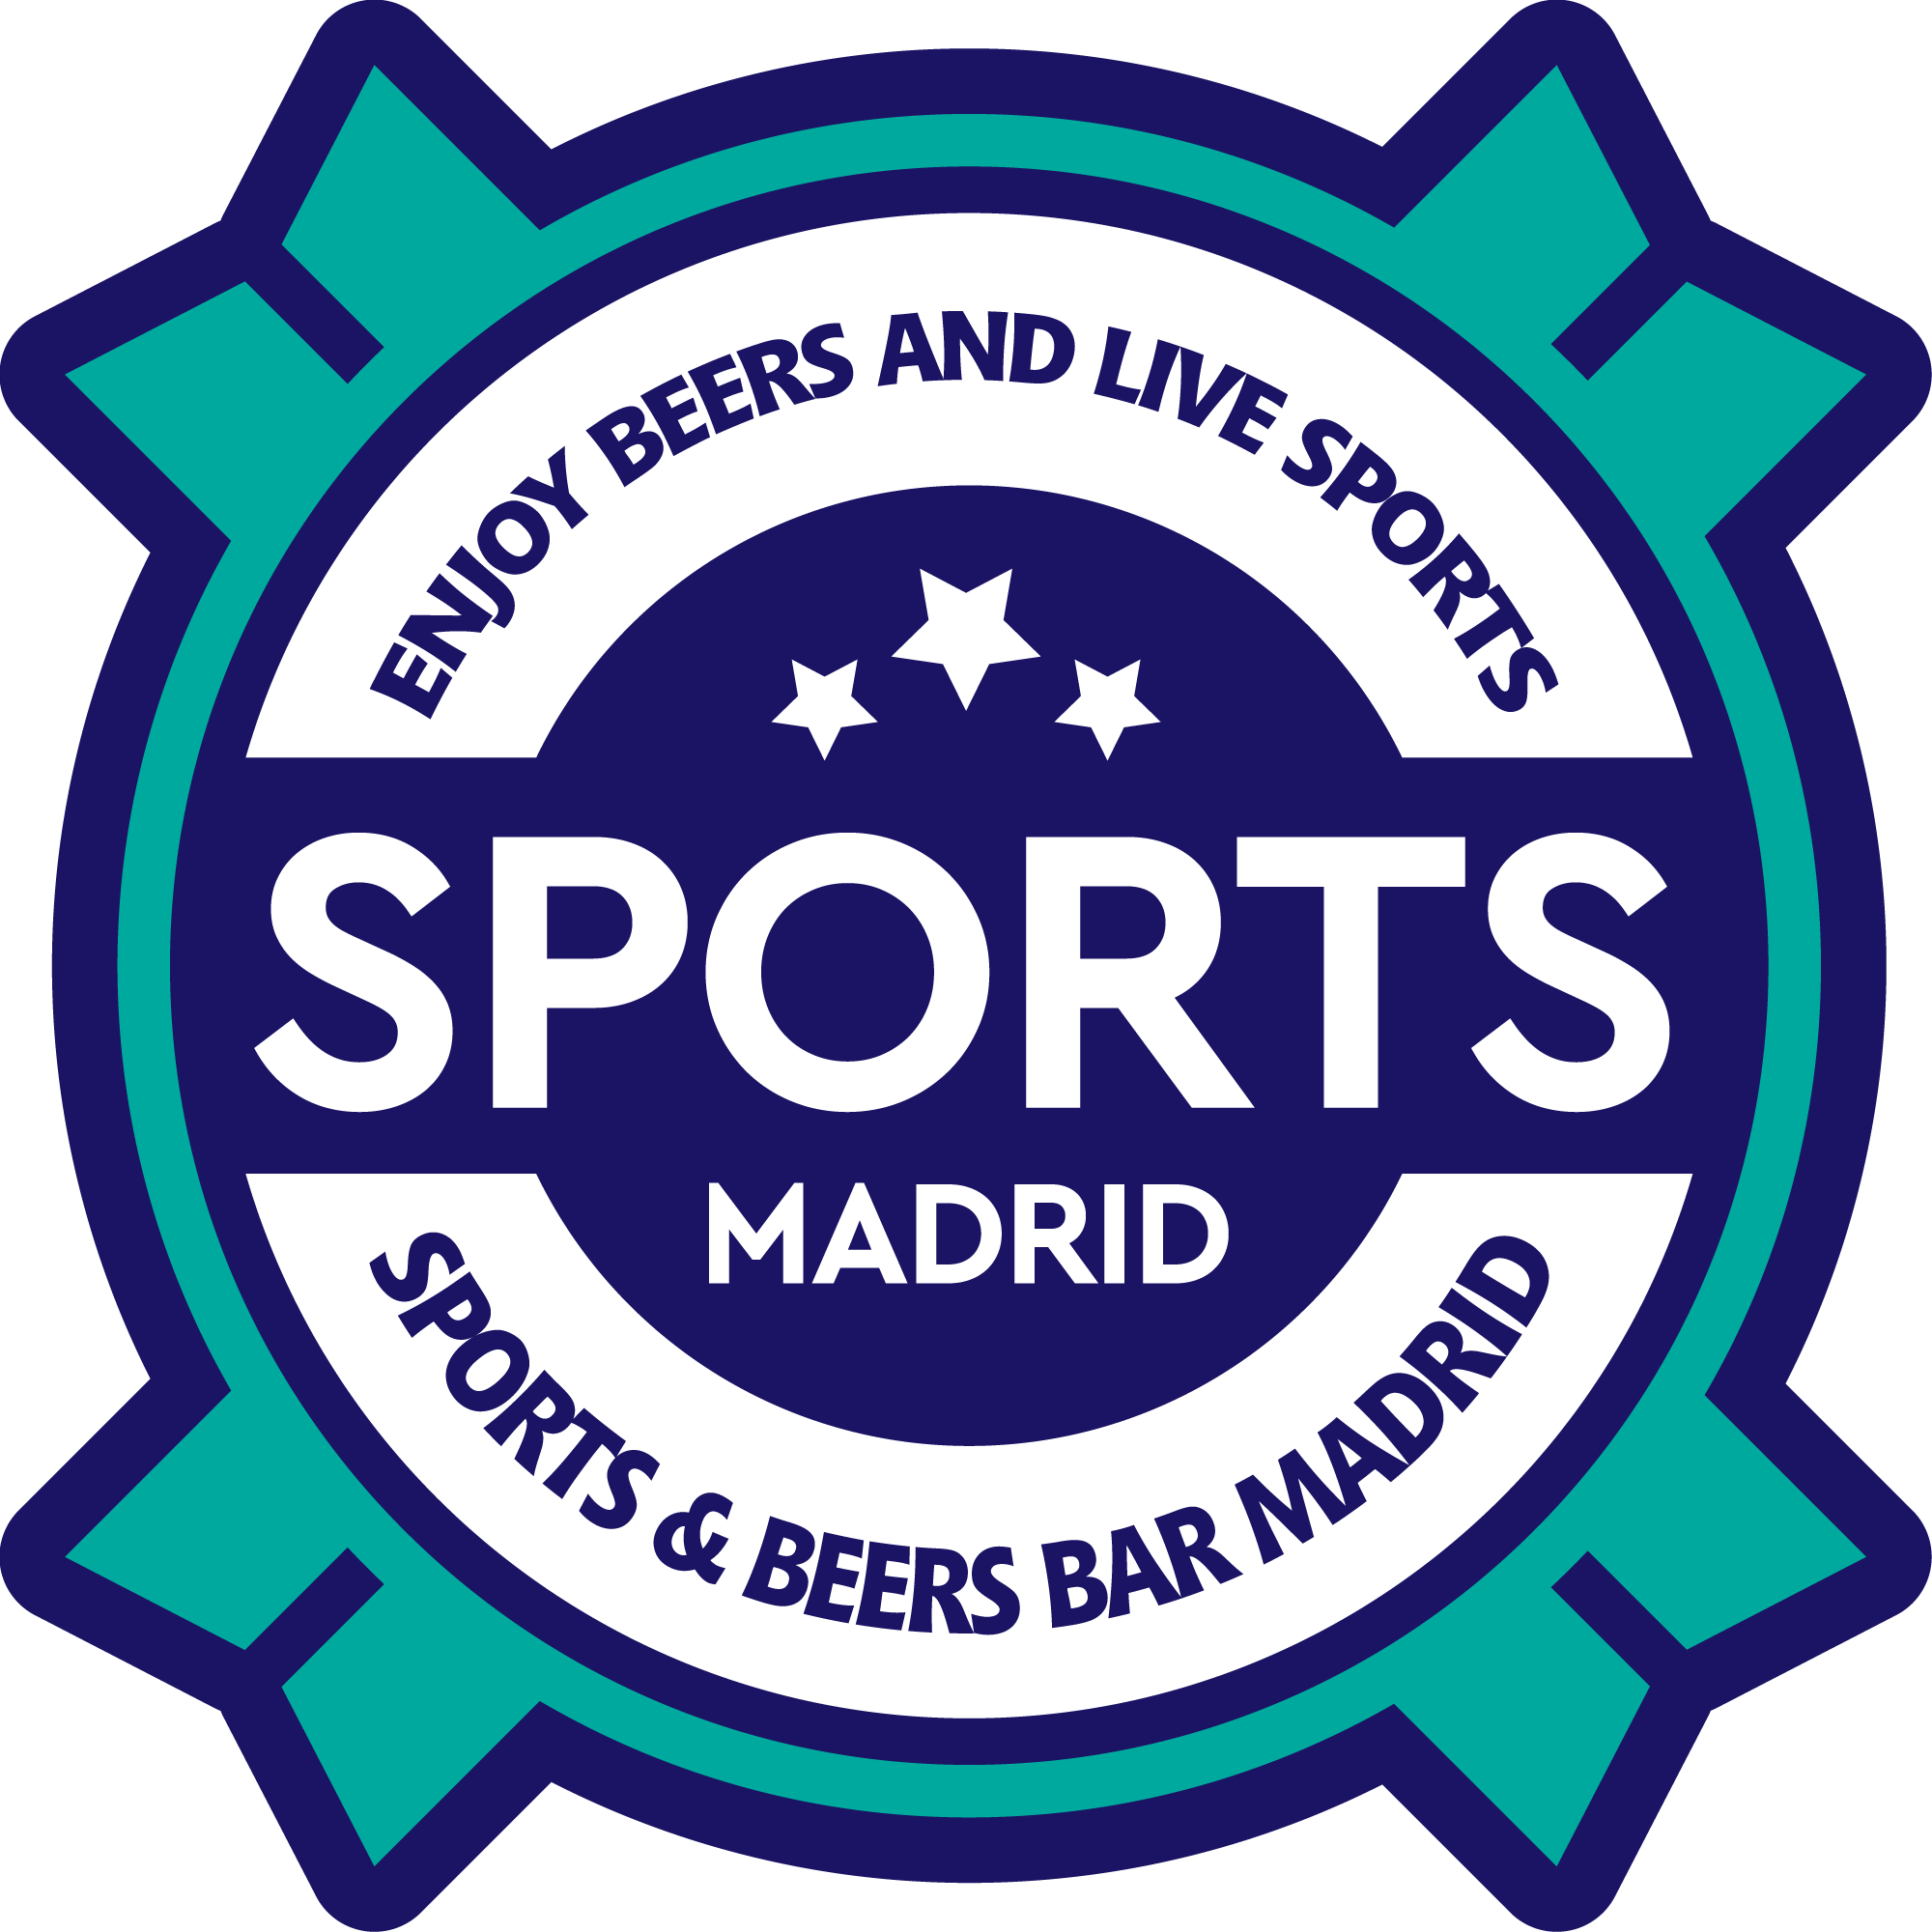 Sports & Beer Bar Madrid